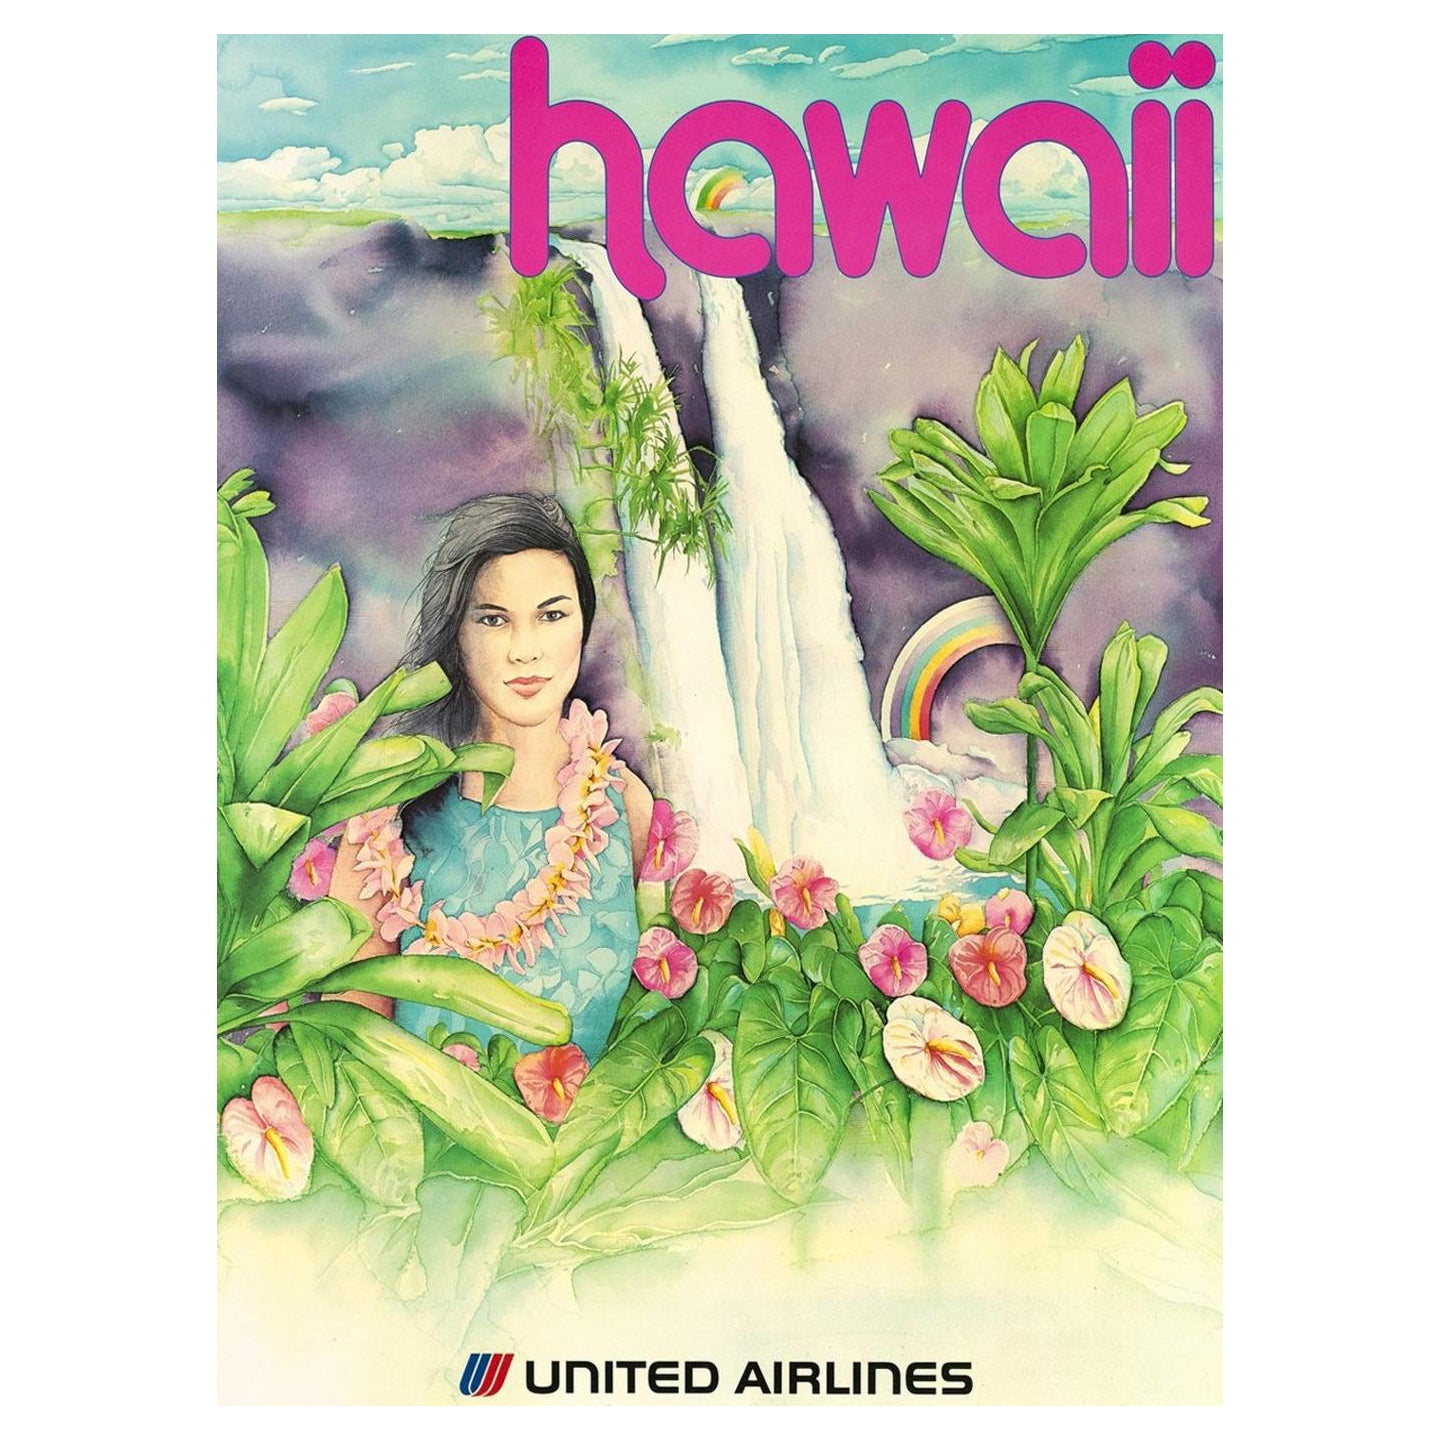 1970 United Airlines - Hawaii Original Vintage Poster For Sale